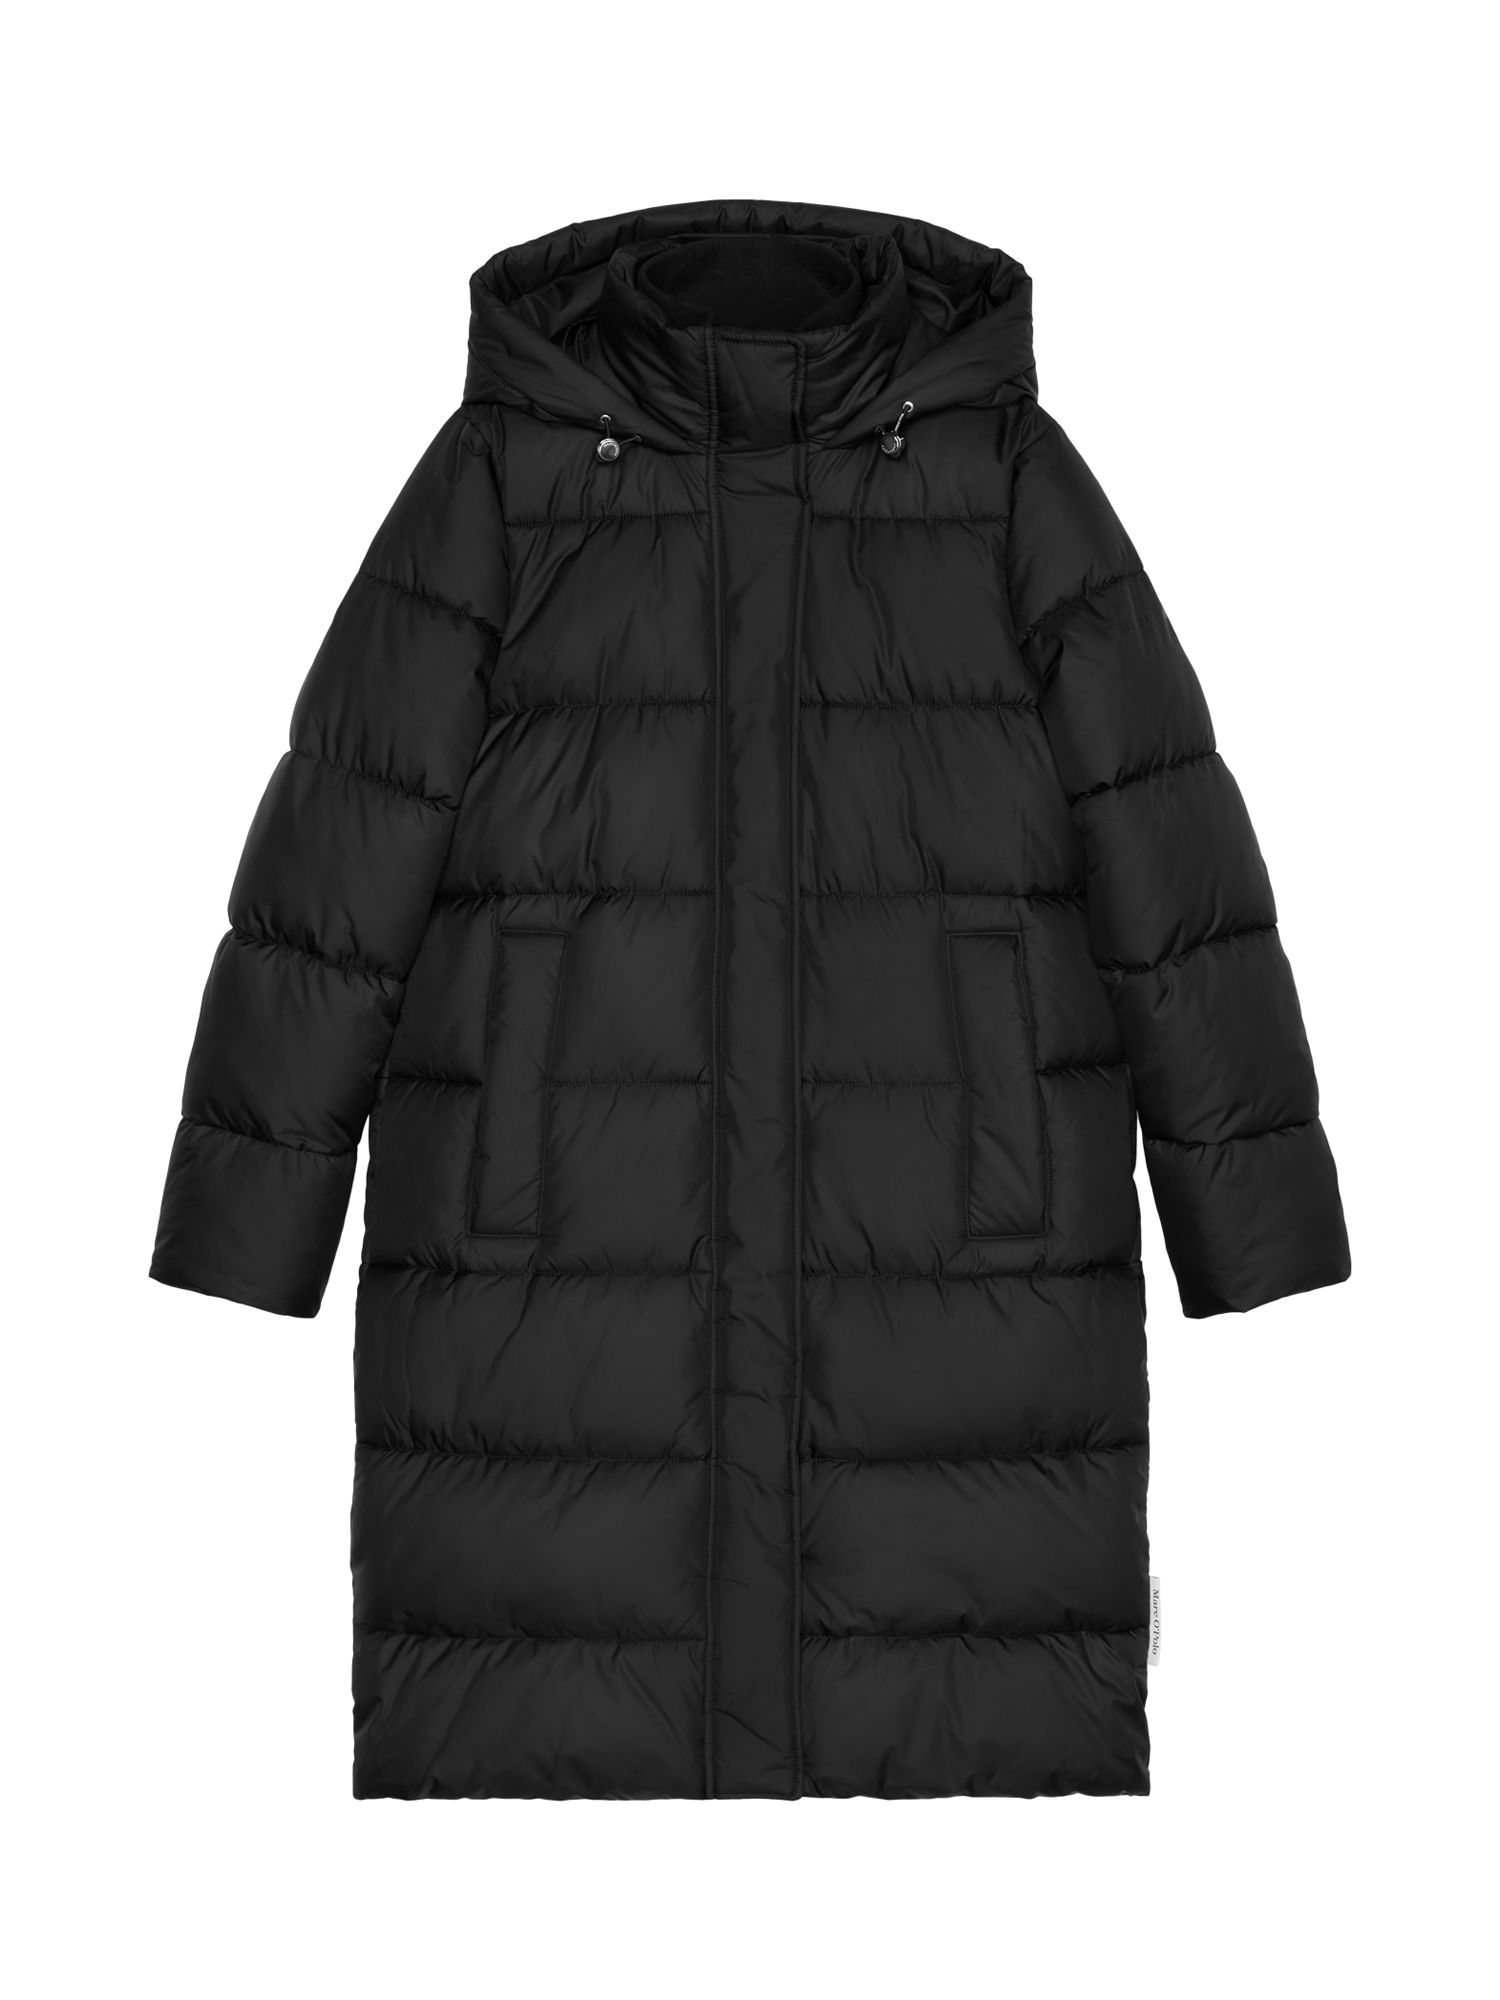 Marc O'Polo Padded Hooded Coat, Black at John Lewis & Partners